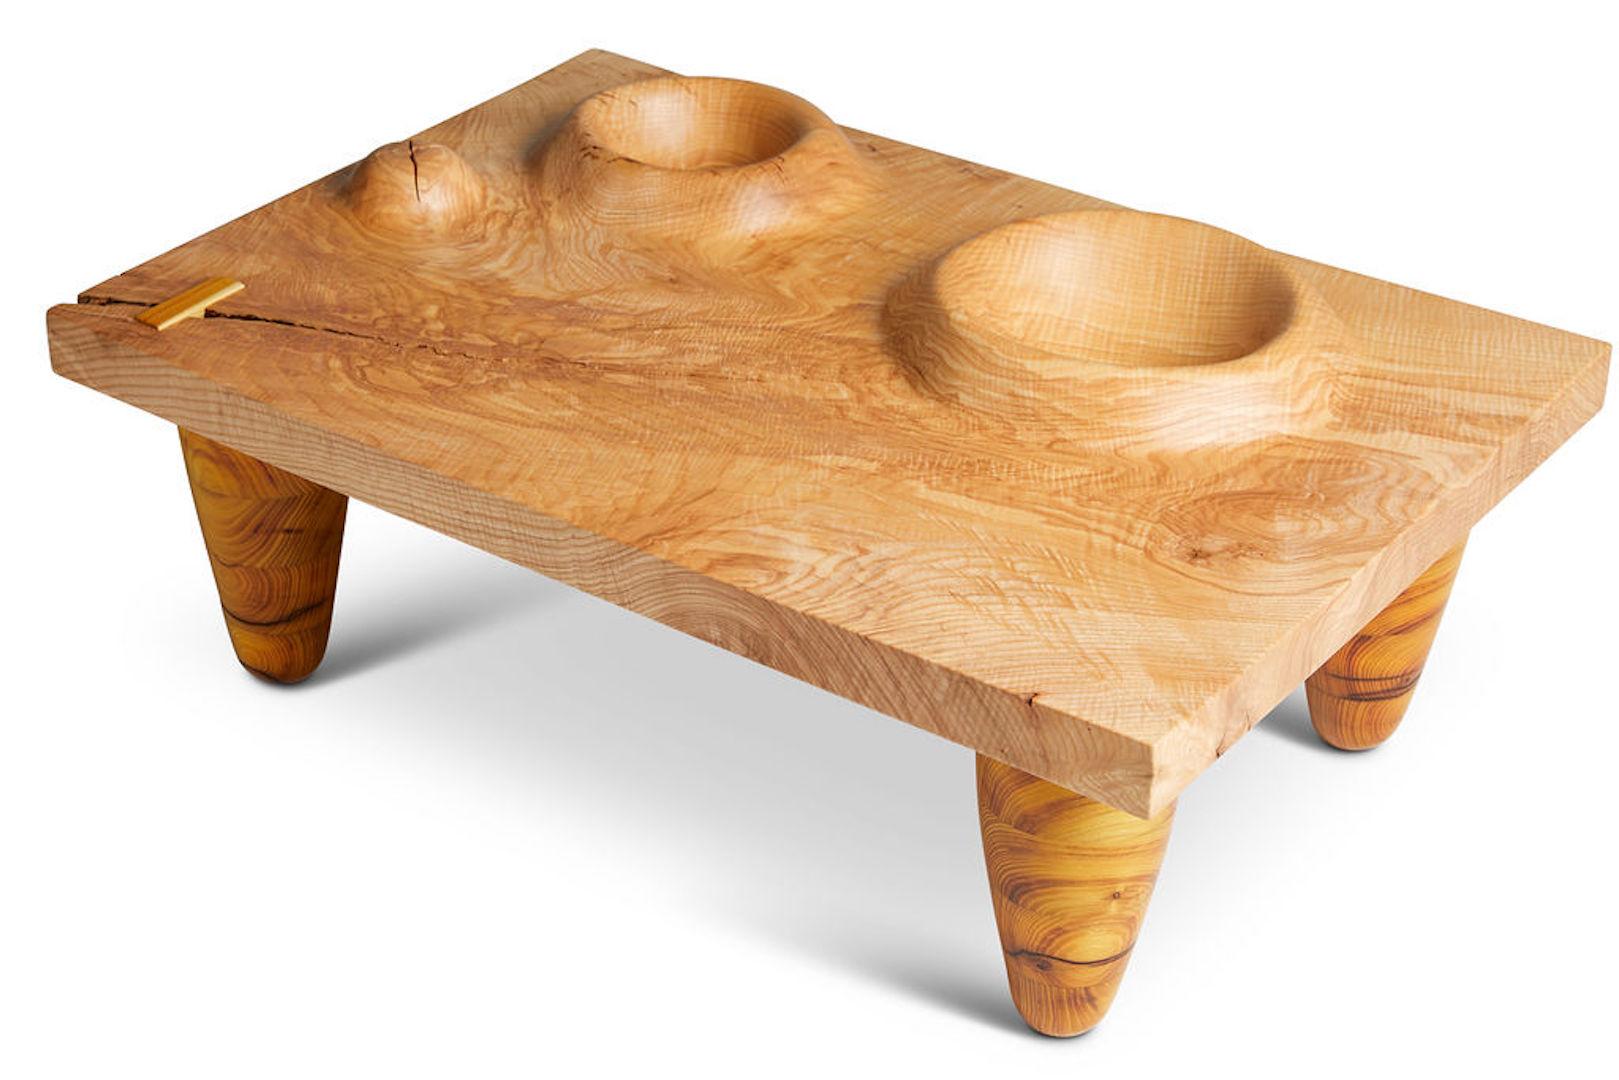 osage orange wood furniture